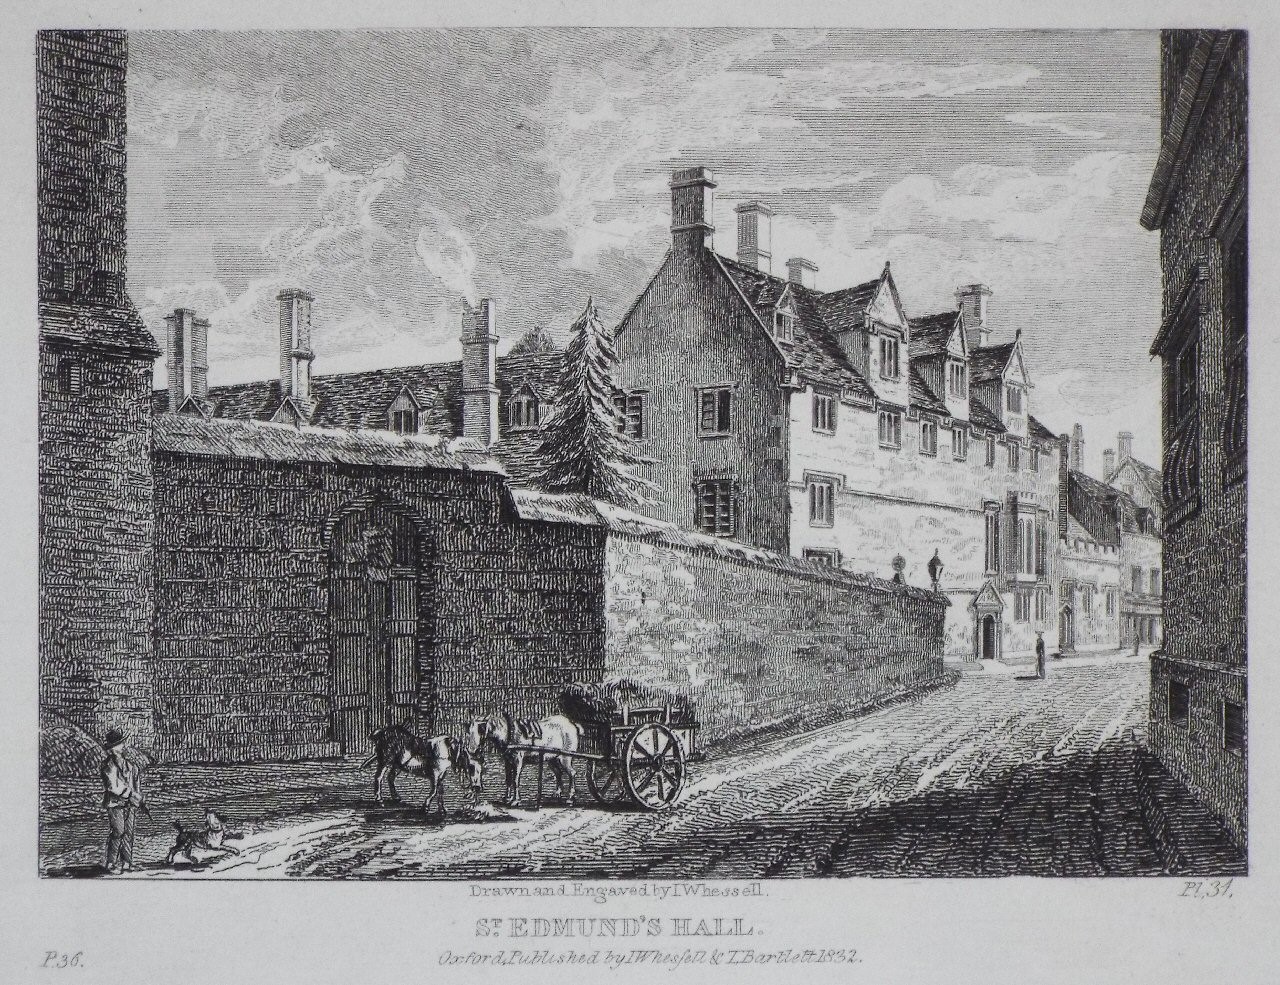 Print - St. Edmund's Hall. - Whessell